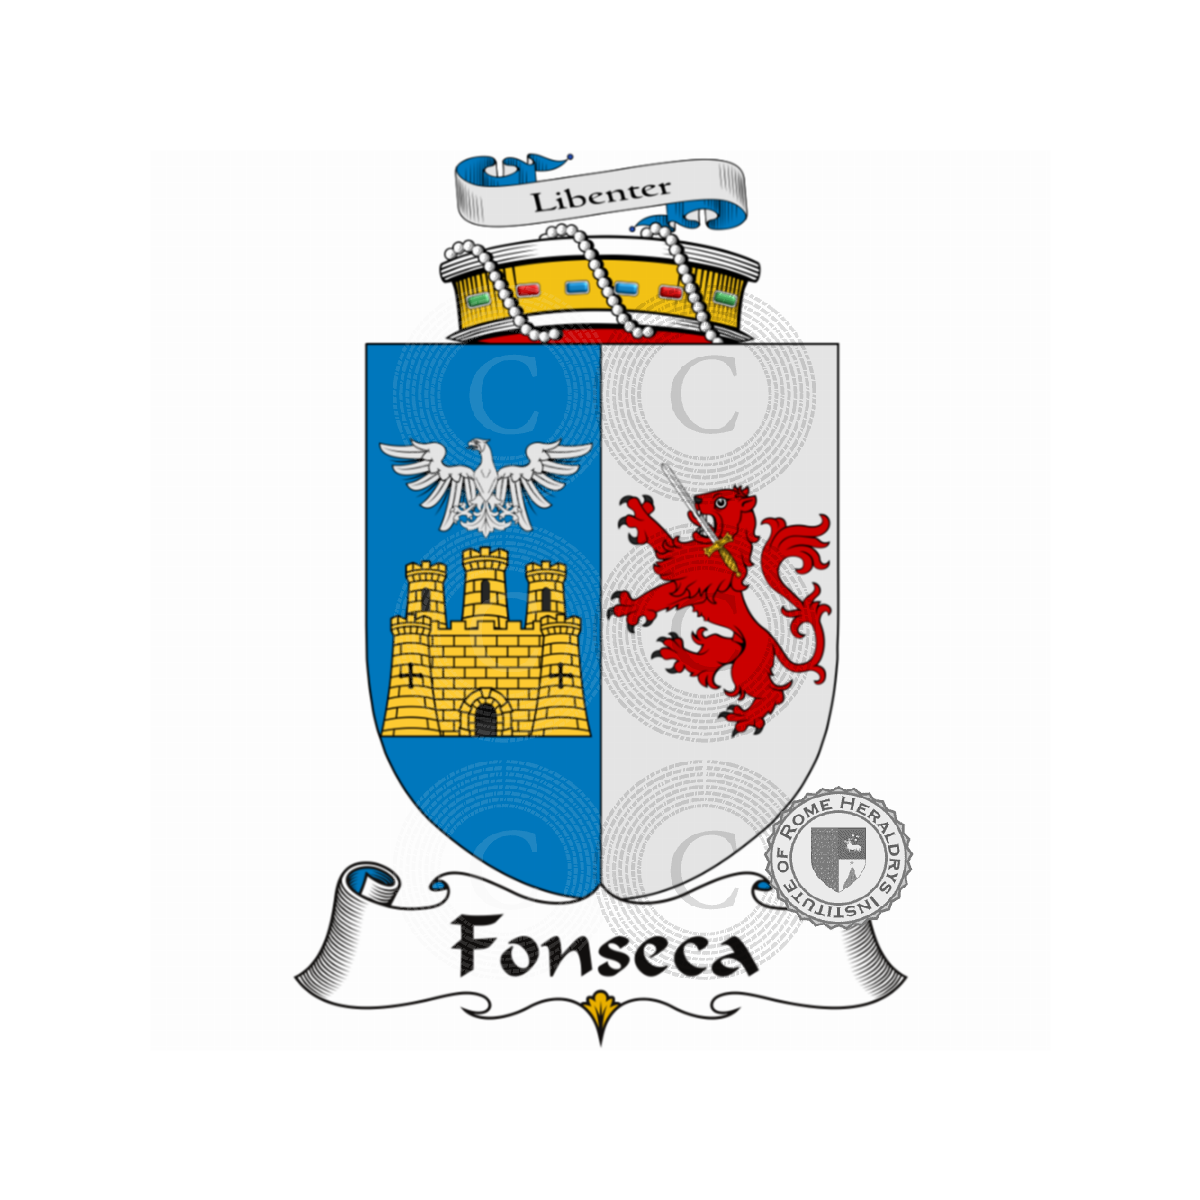 Coat of arms of familyFonseca